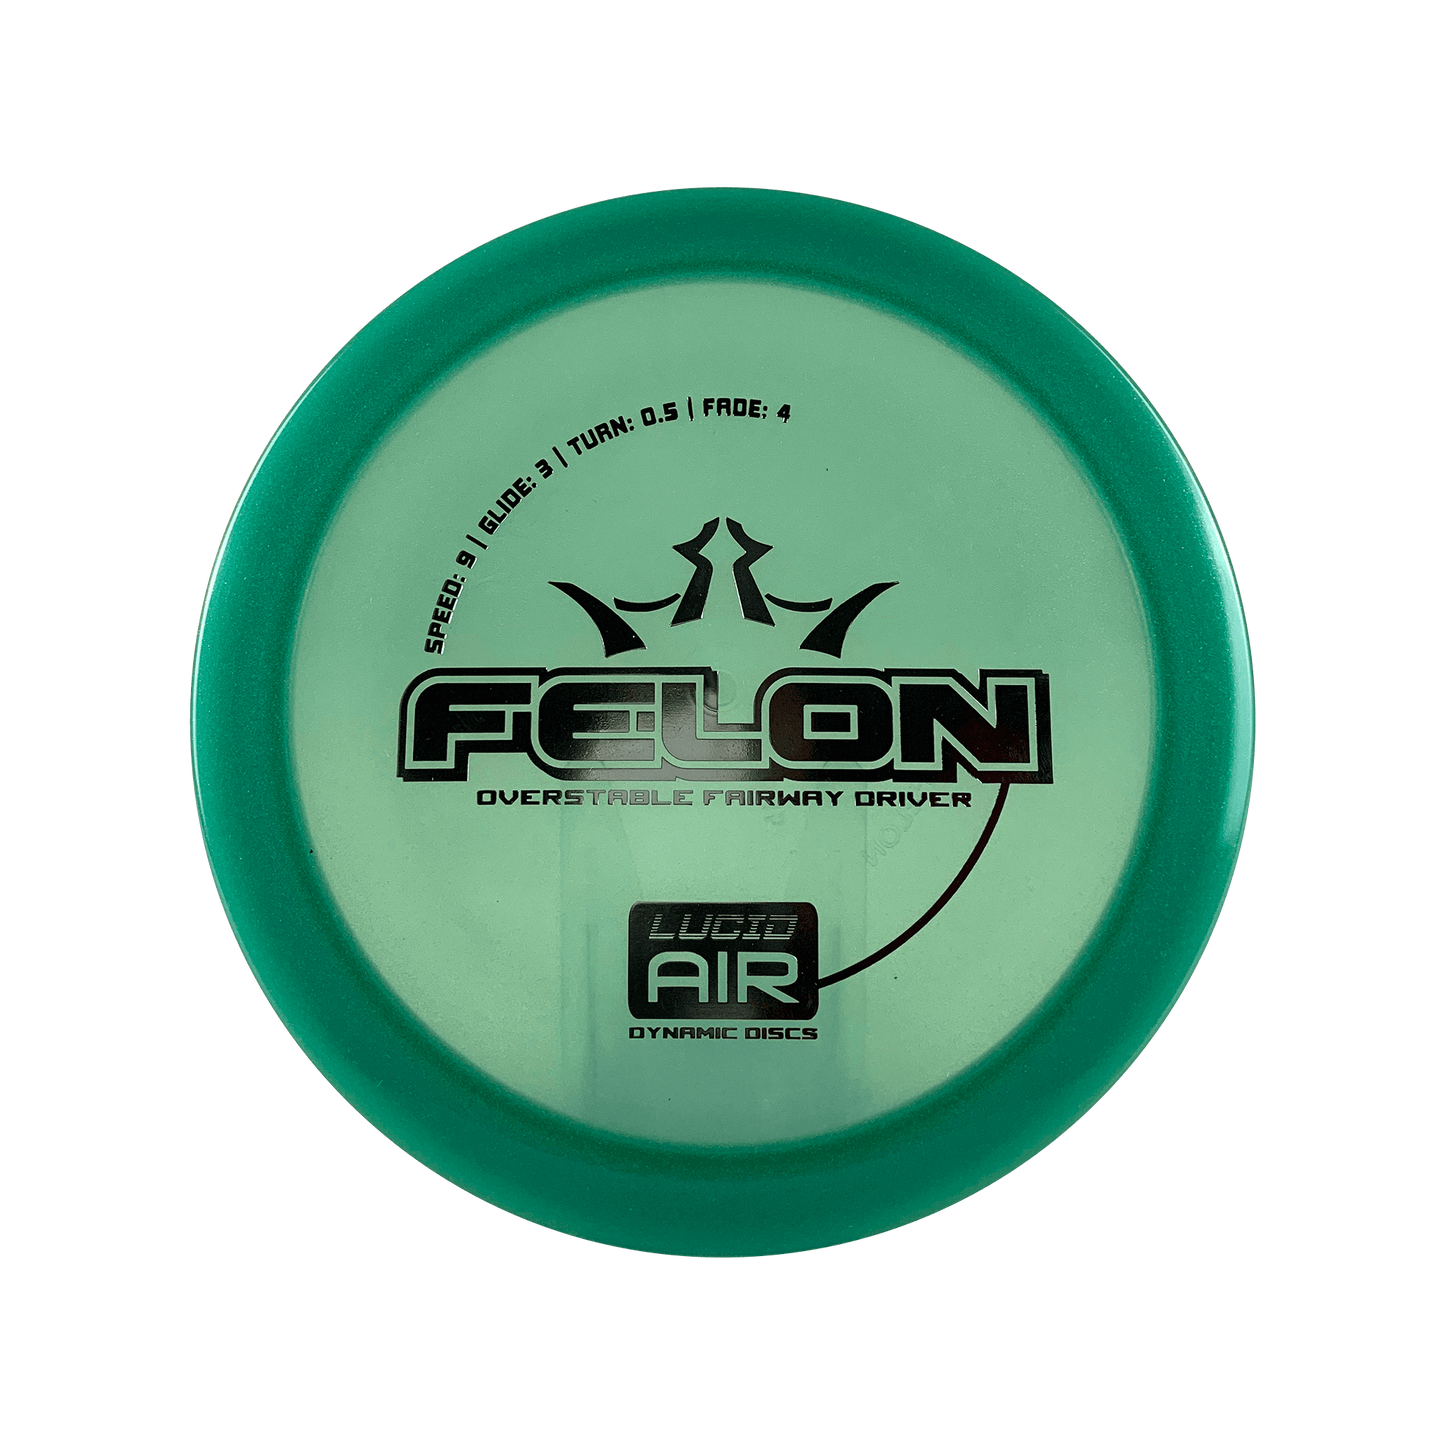 Lucid Air Felon Disc Dynamic Discs teal 157 